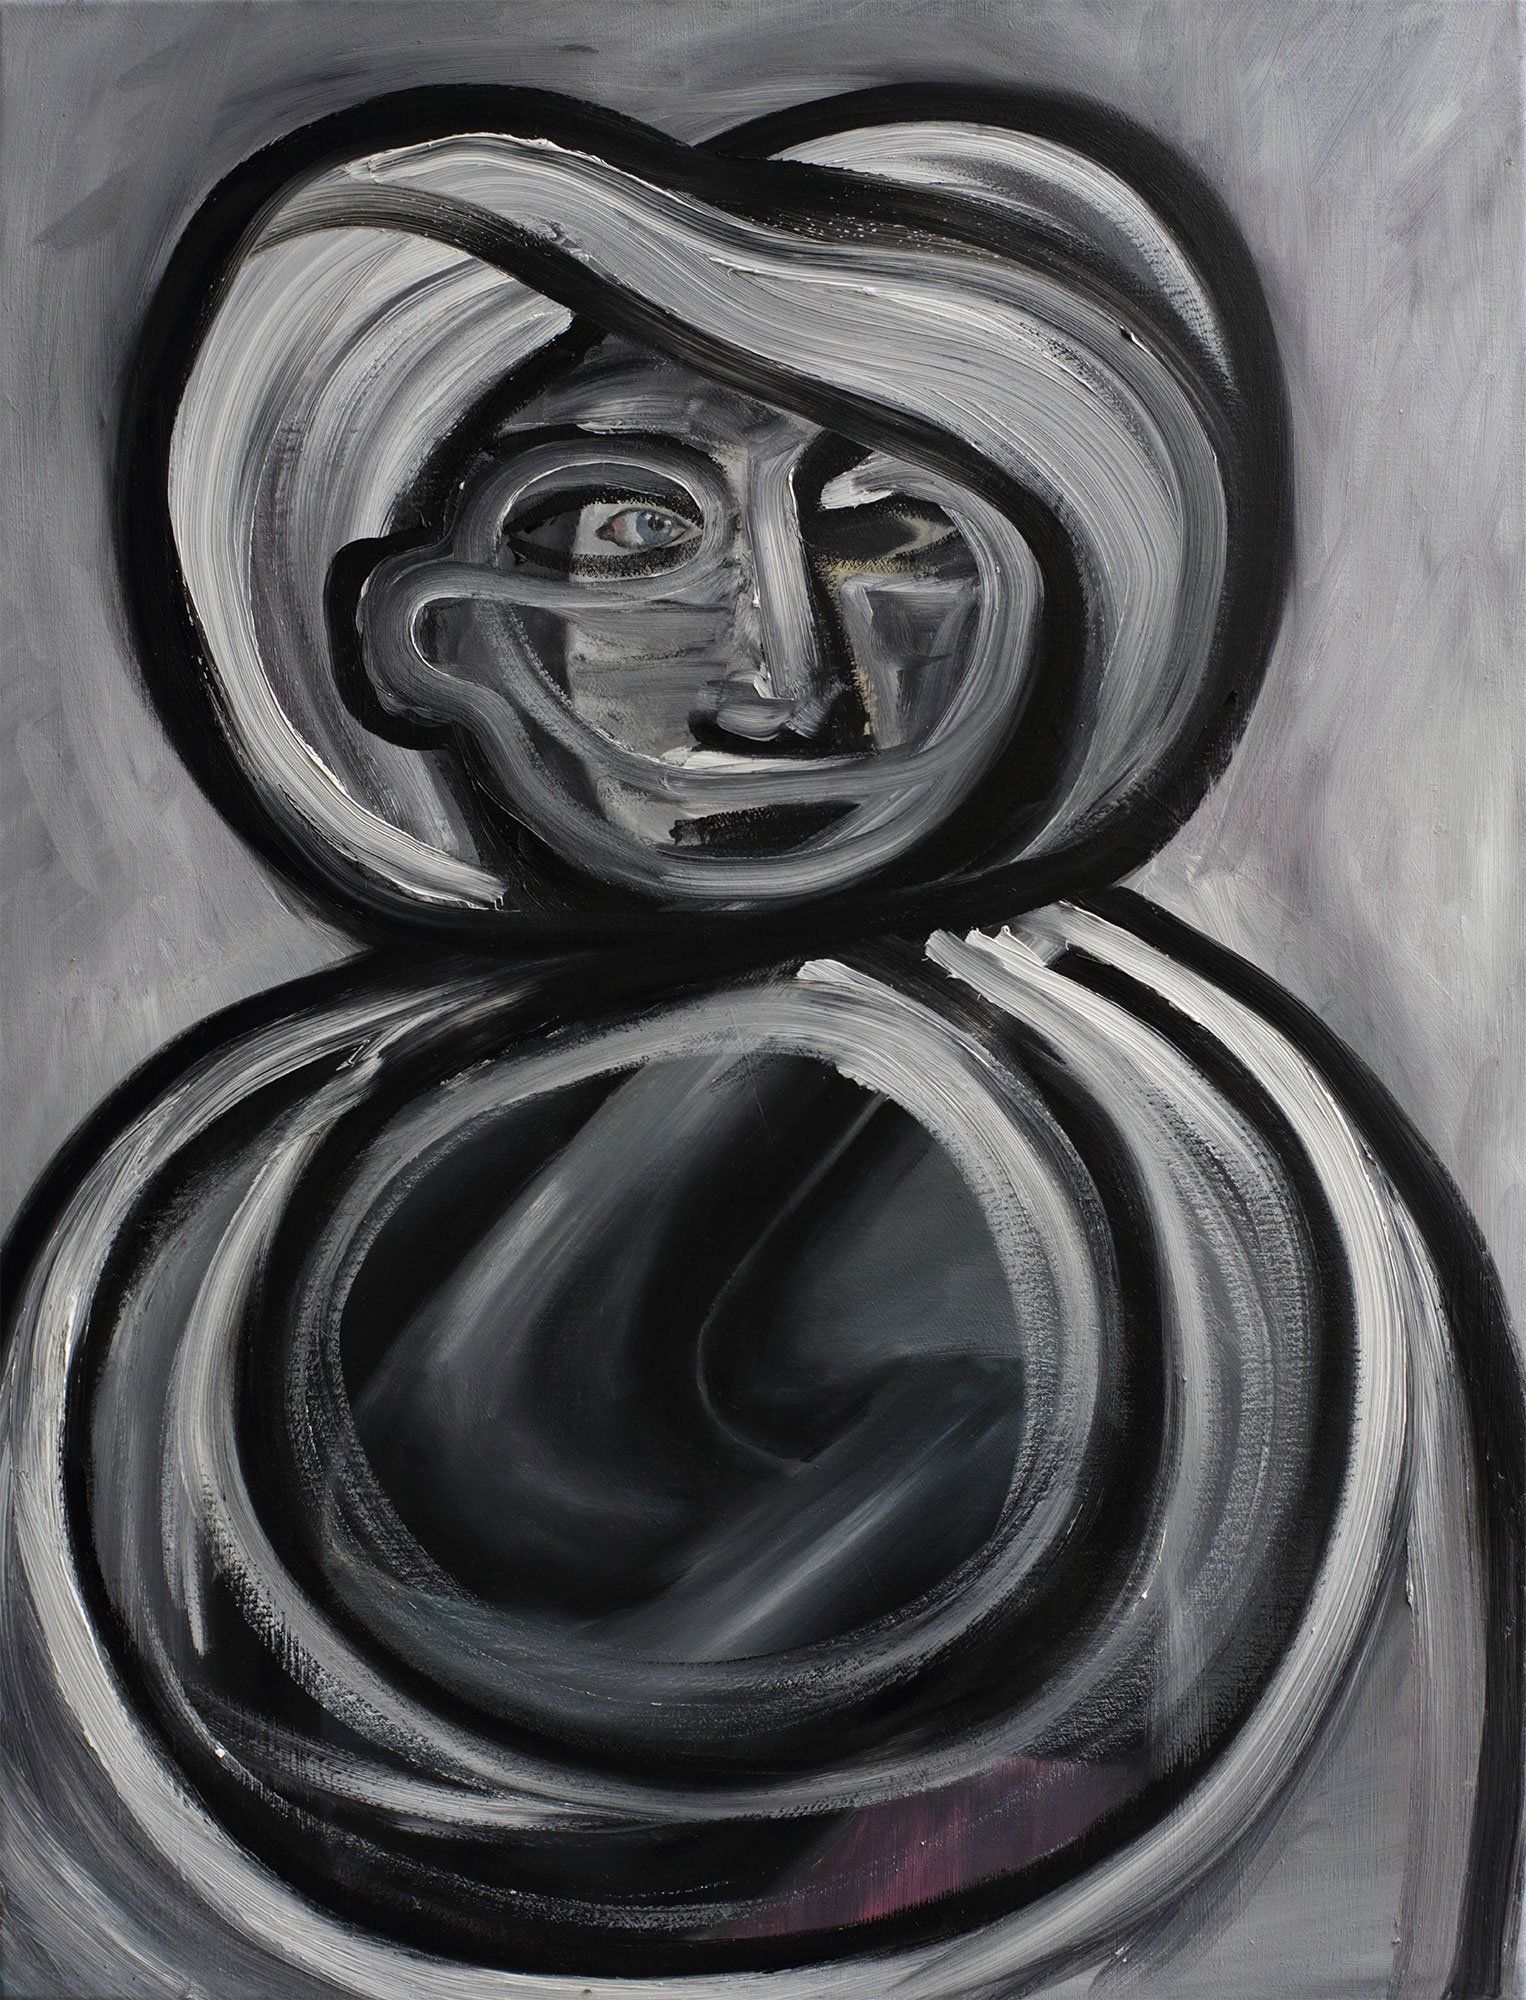 „Face 80x60 No. 7“ by Sebastian Bieniek (B1EN1EK), 2014. Oil on canvas, 80 cm. x 60 cm. Painting from the oeuvre of BieniekFace (Bieniek-Face) by the artist.